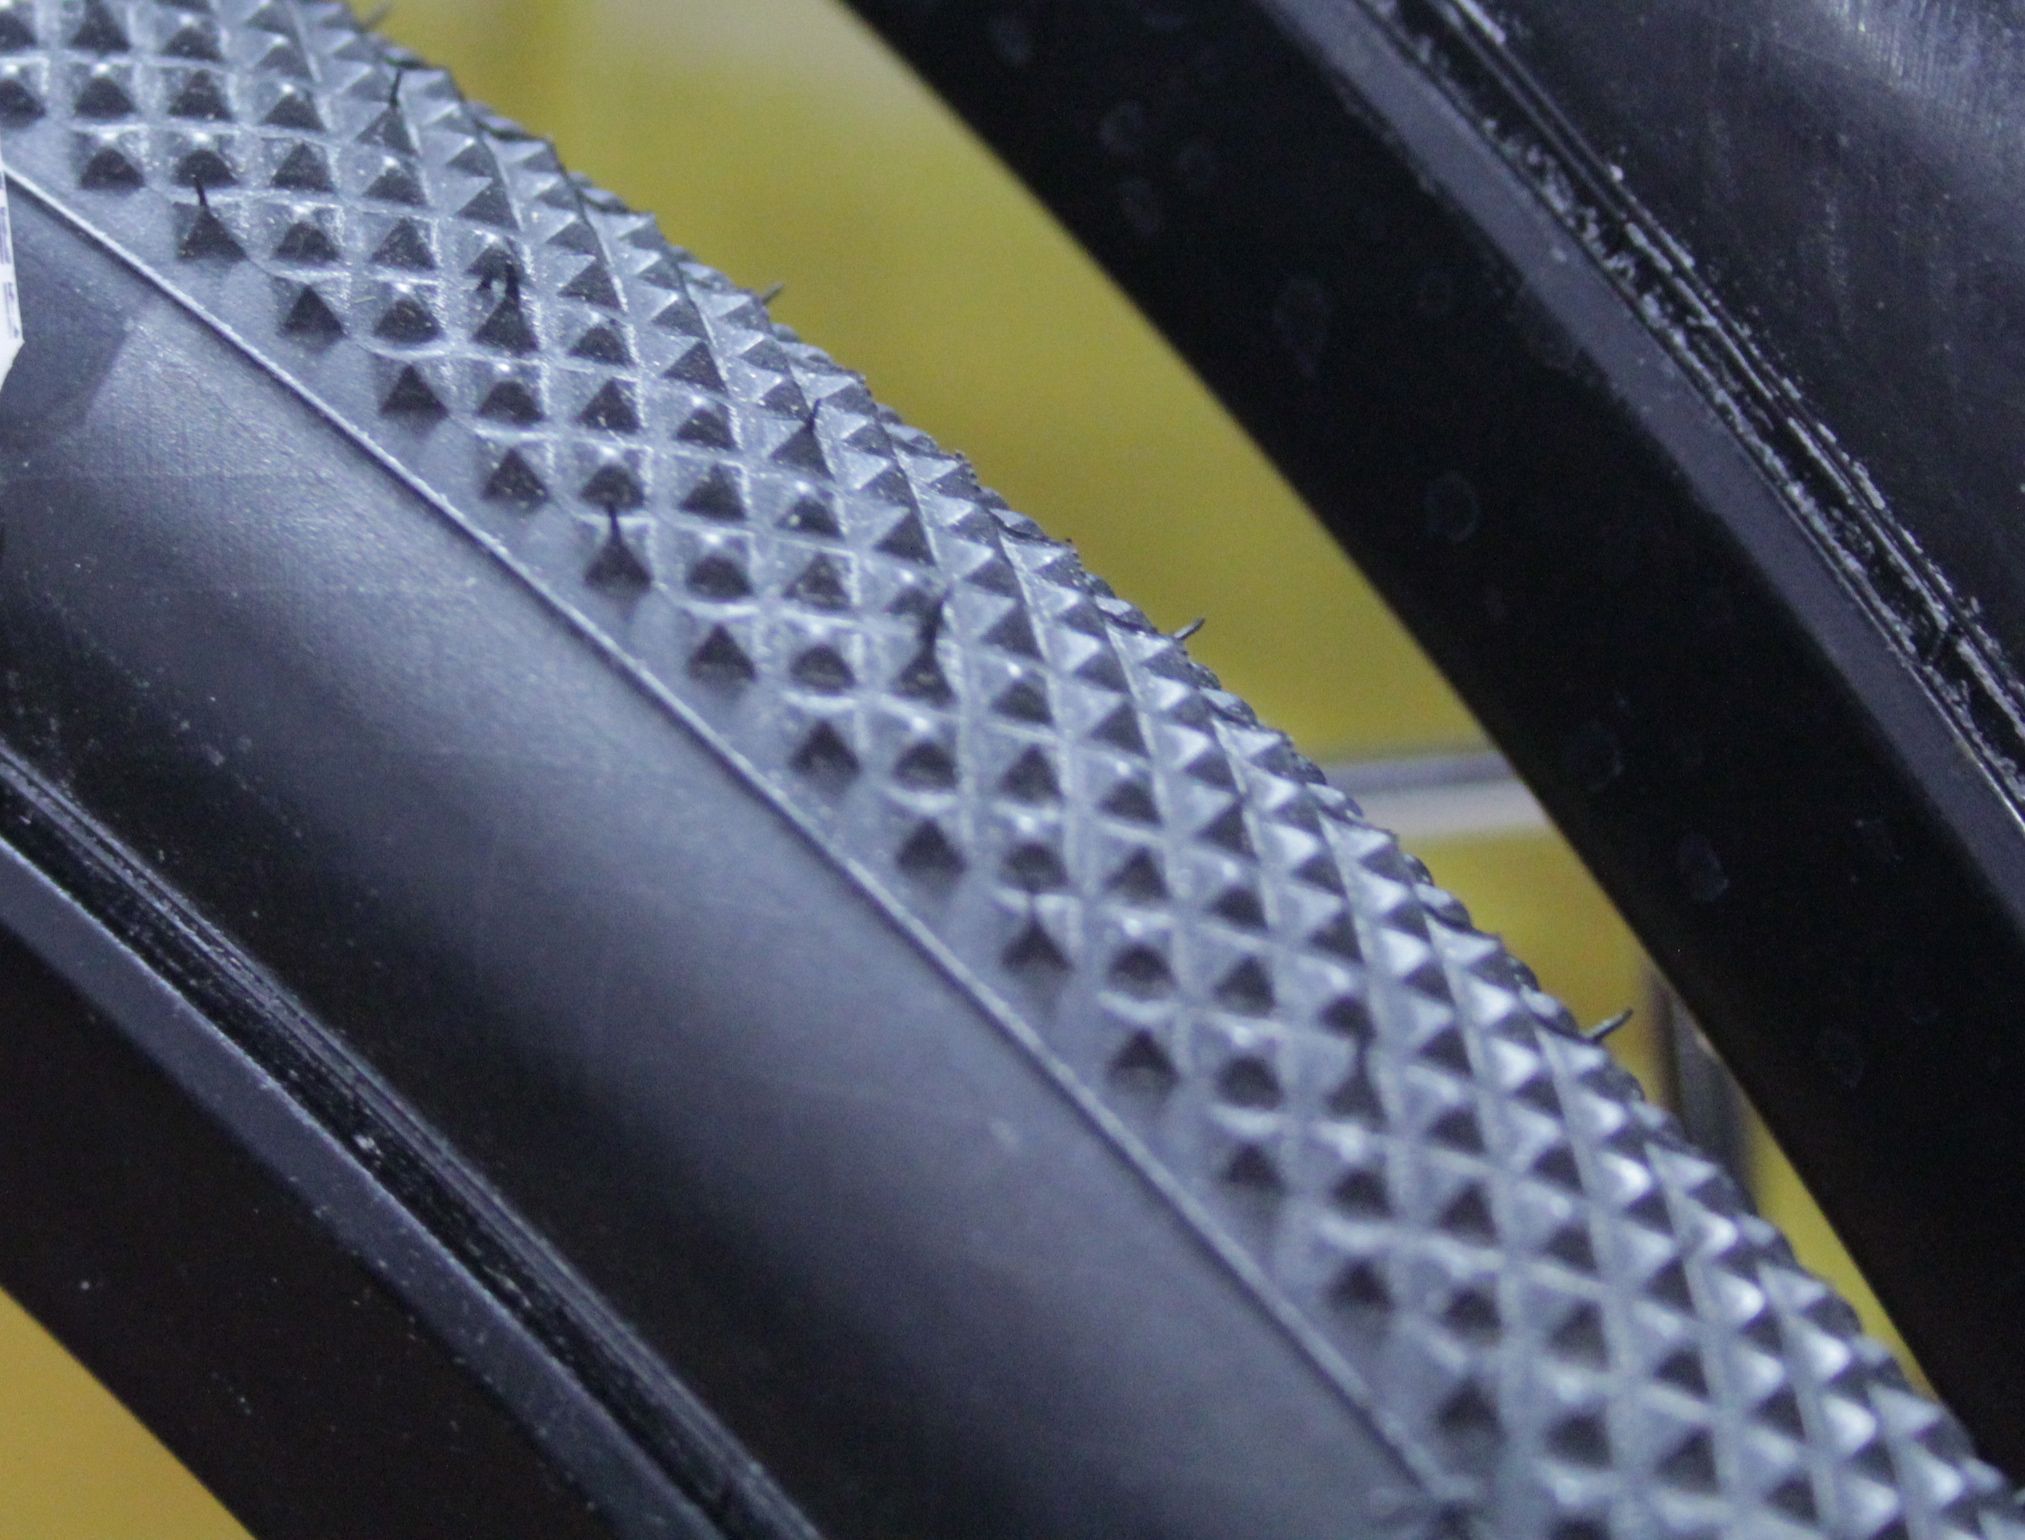 40mm cyclocross tyres